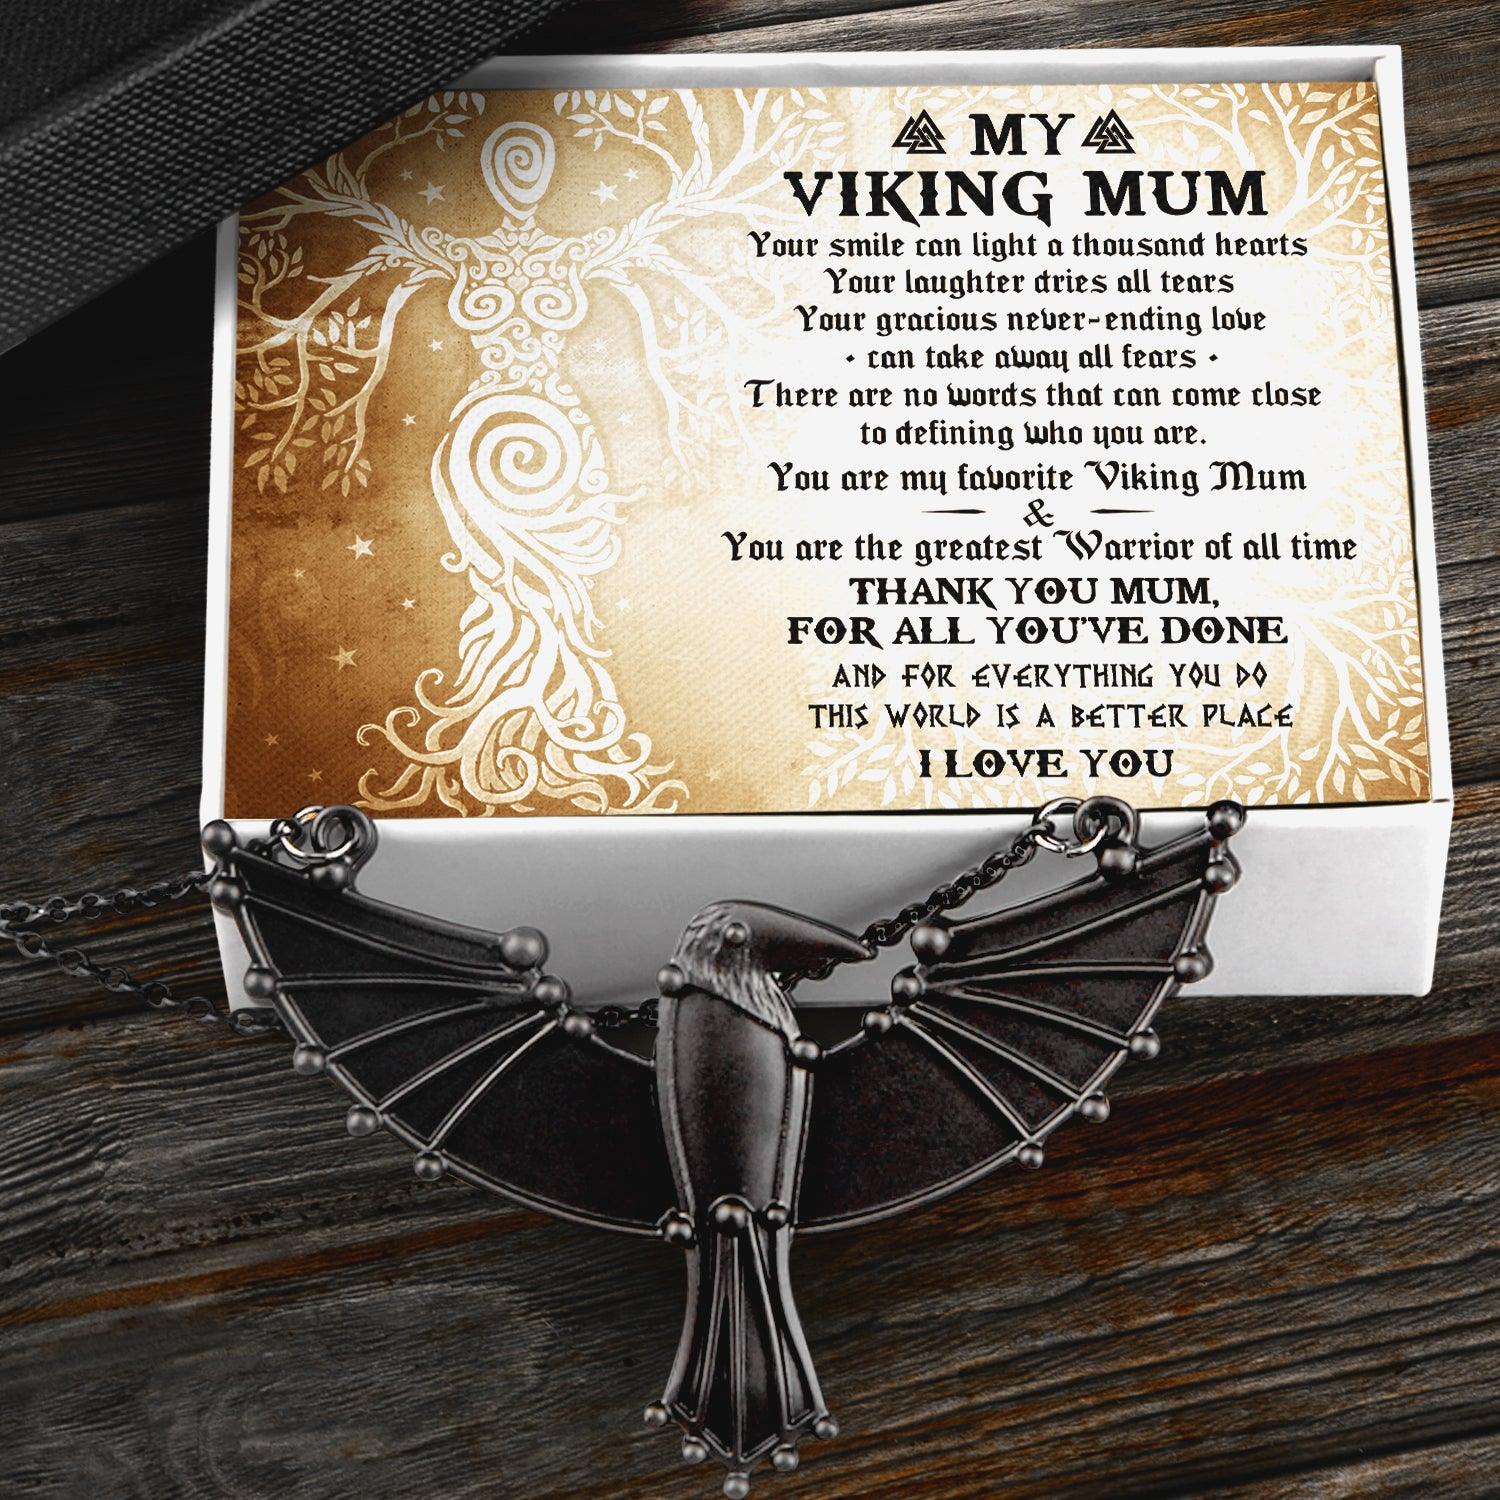 Dark Raven Necklace - To My Viking Mum - You Are My Favorite Viking Mum - Augncm19001 - Gifts Holder